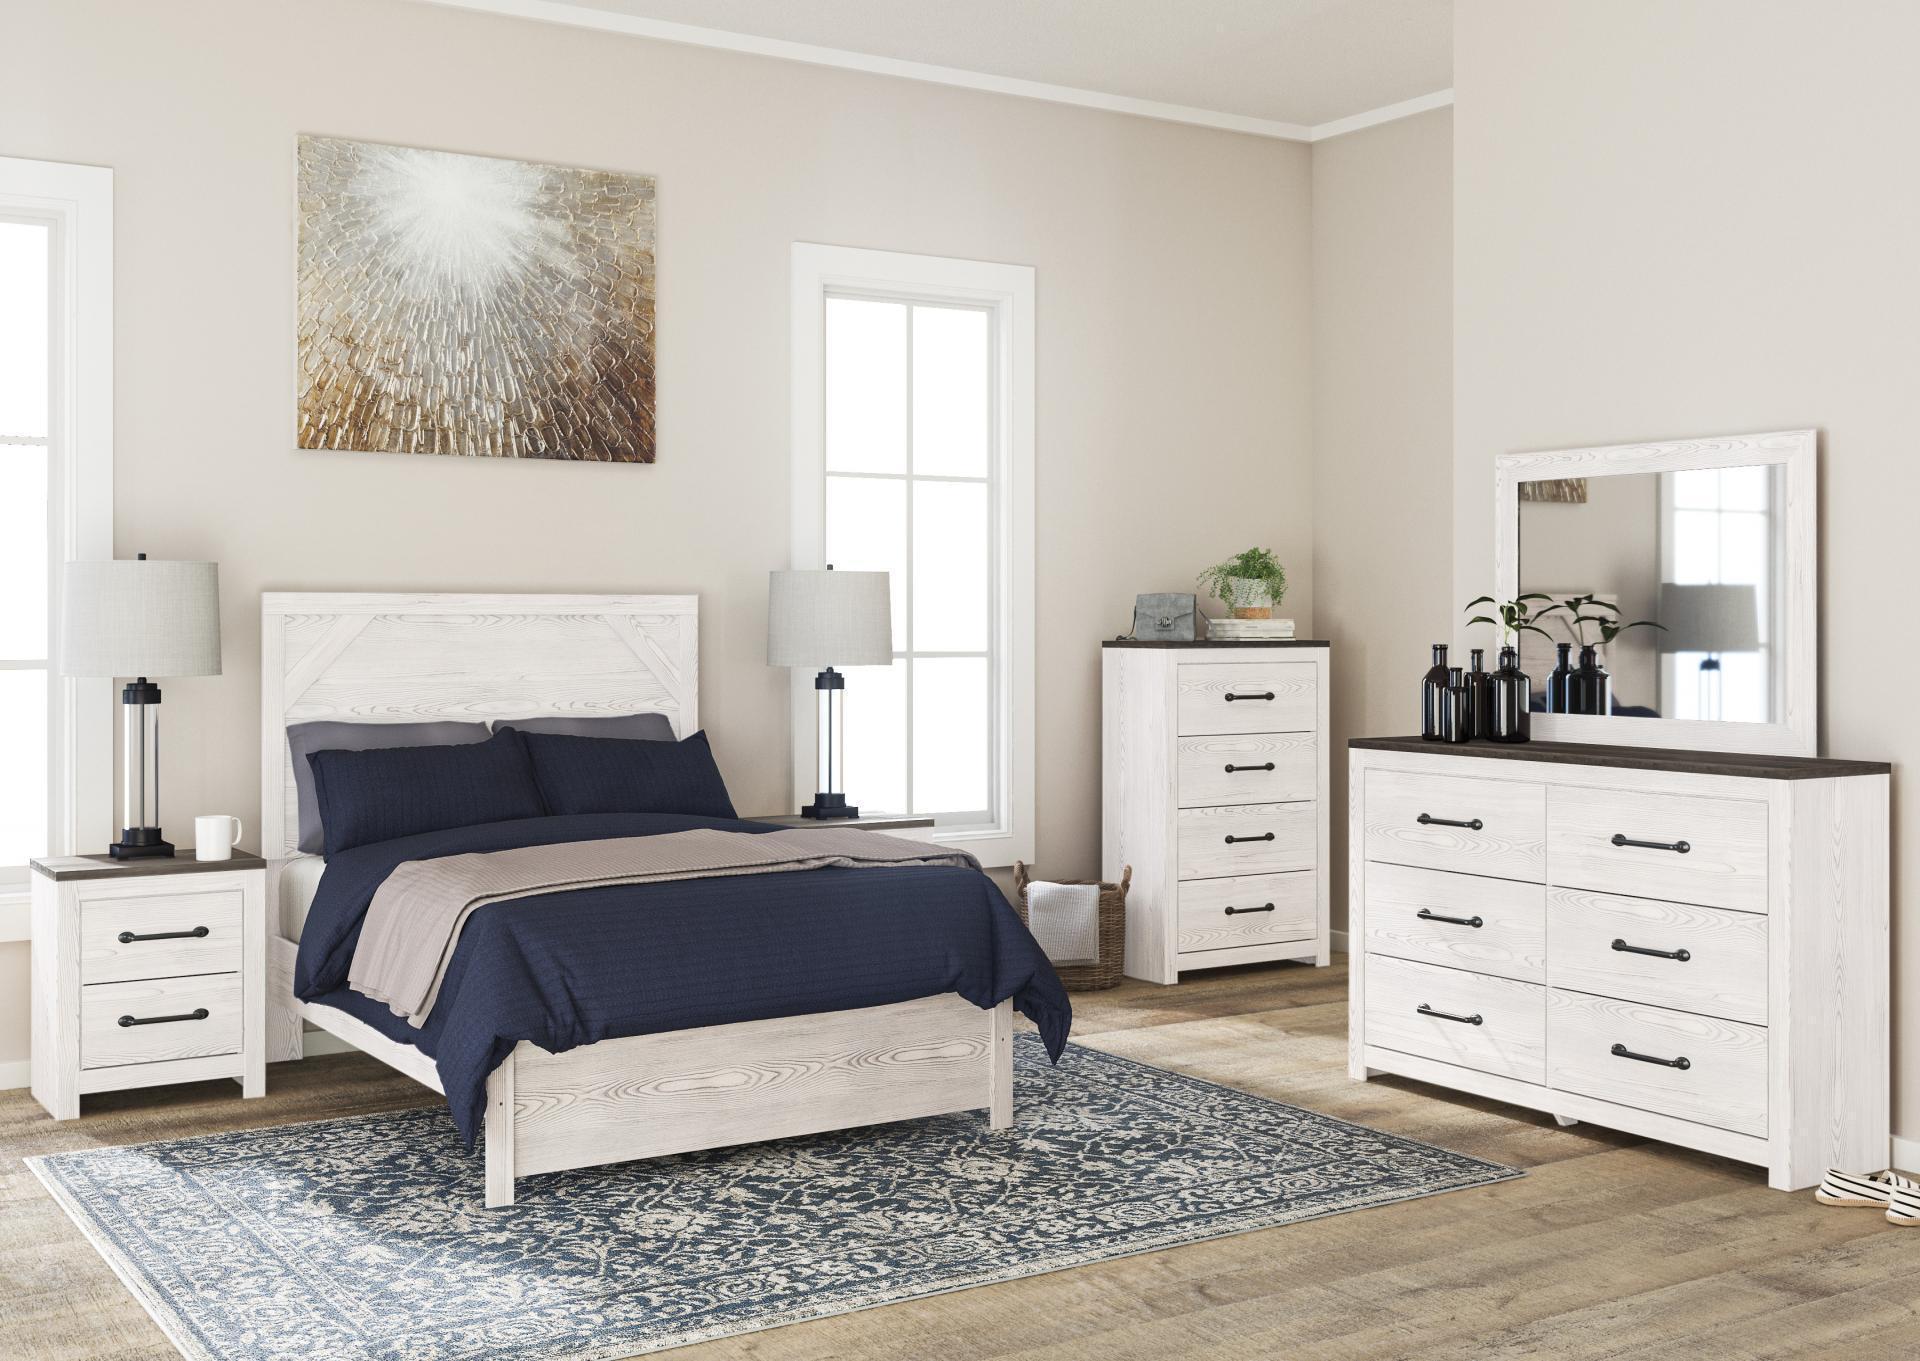 White Gerridan Queen Panel Bed w/ Dresser & Mirror,In-Store Product